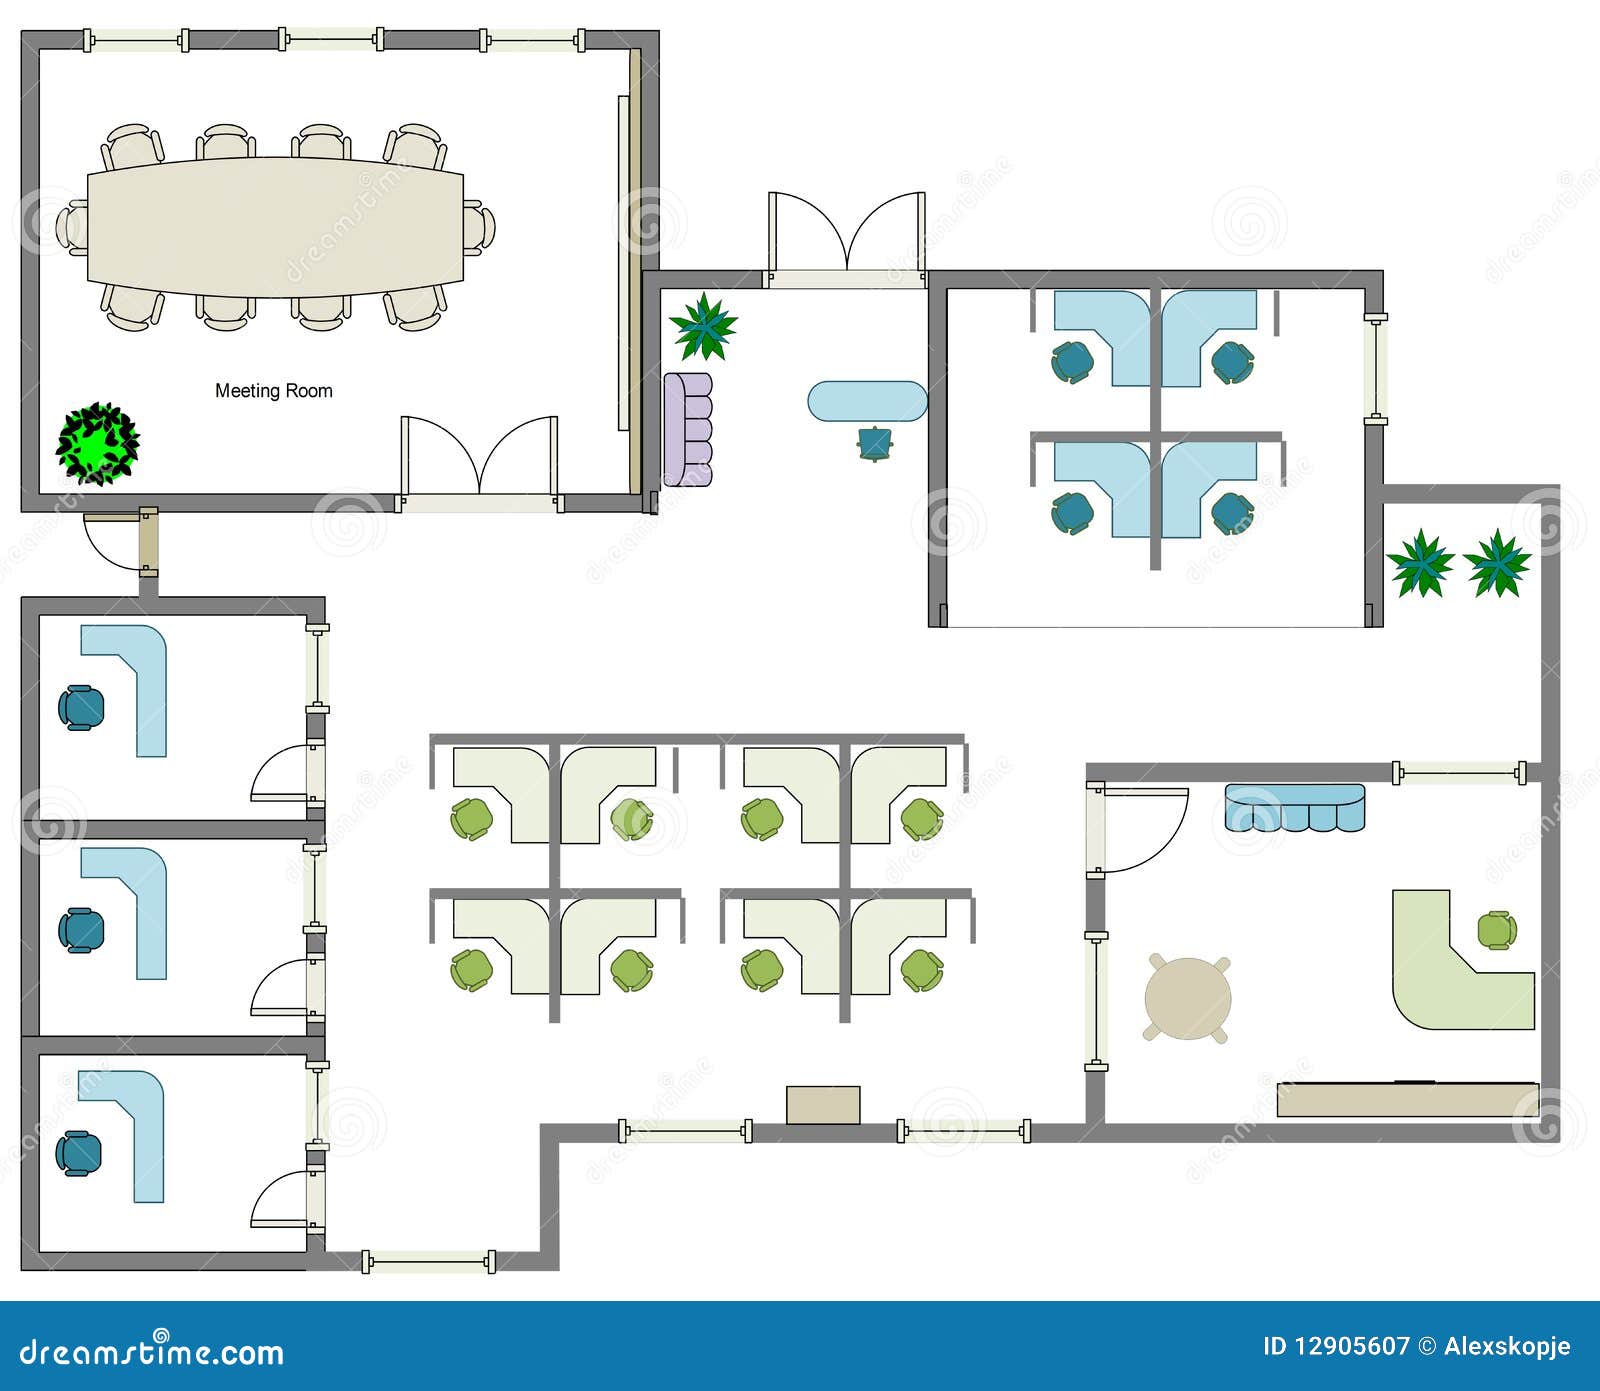 Business floor plan stock illustration. Illustration of indoors 12905607